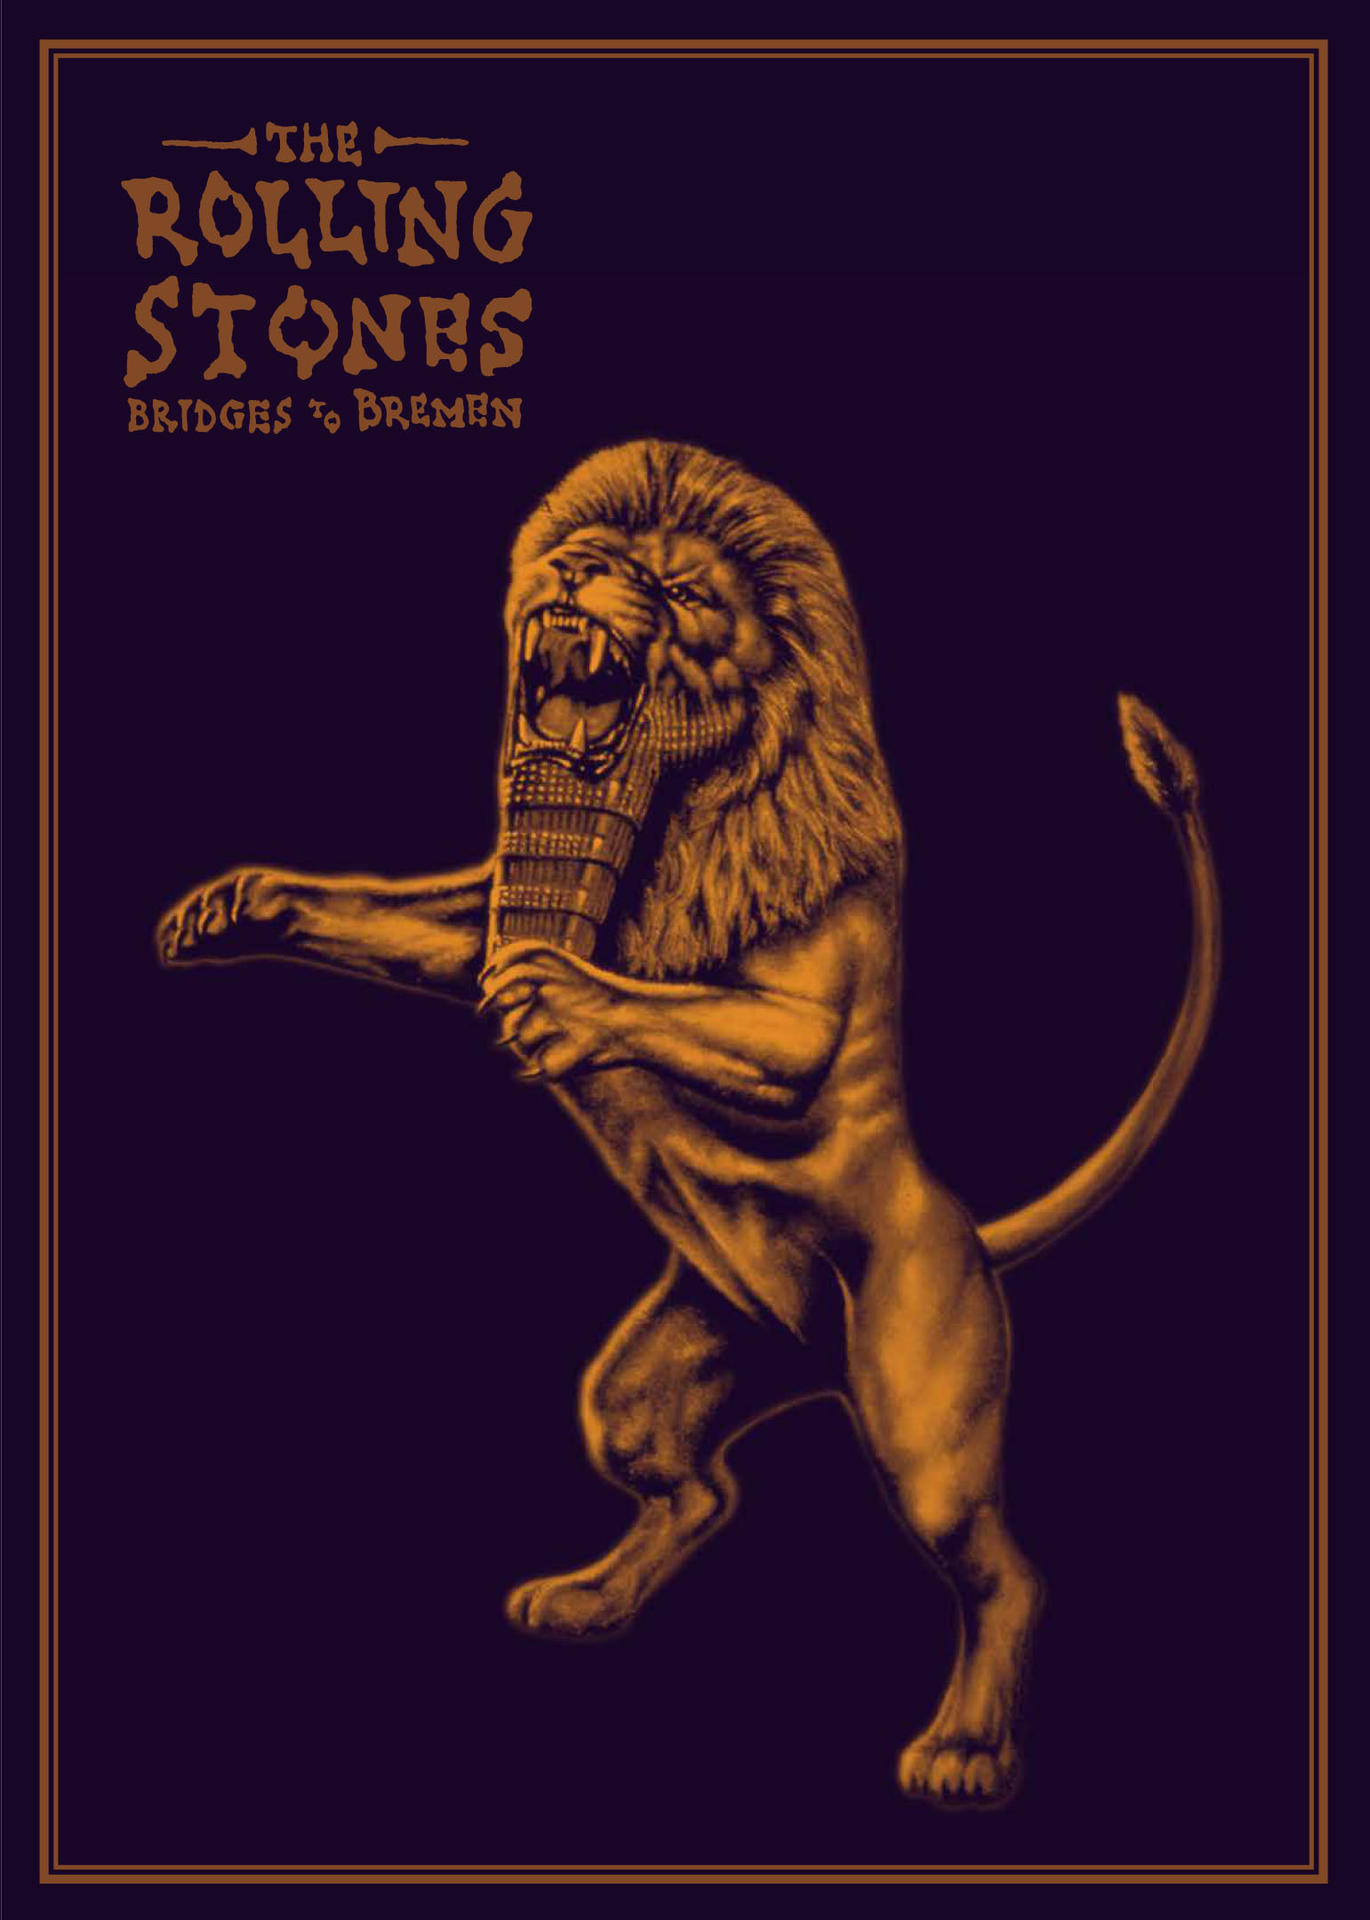 Stones Rolling - The Bremen Bridges (DVD) - To